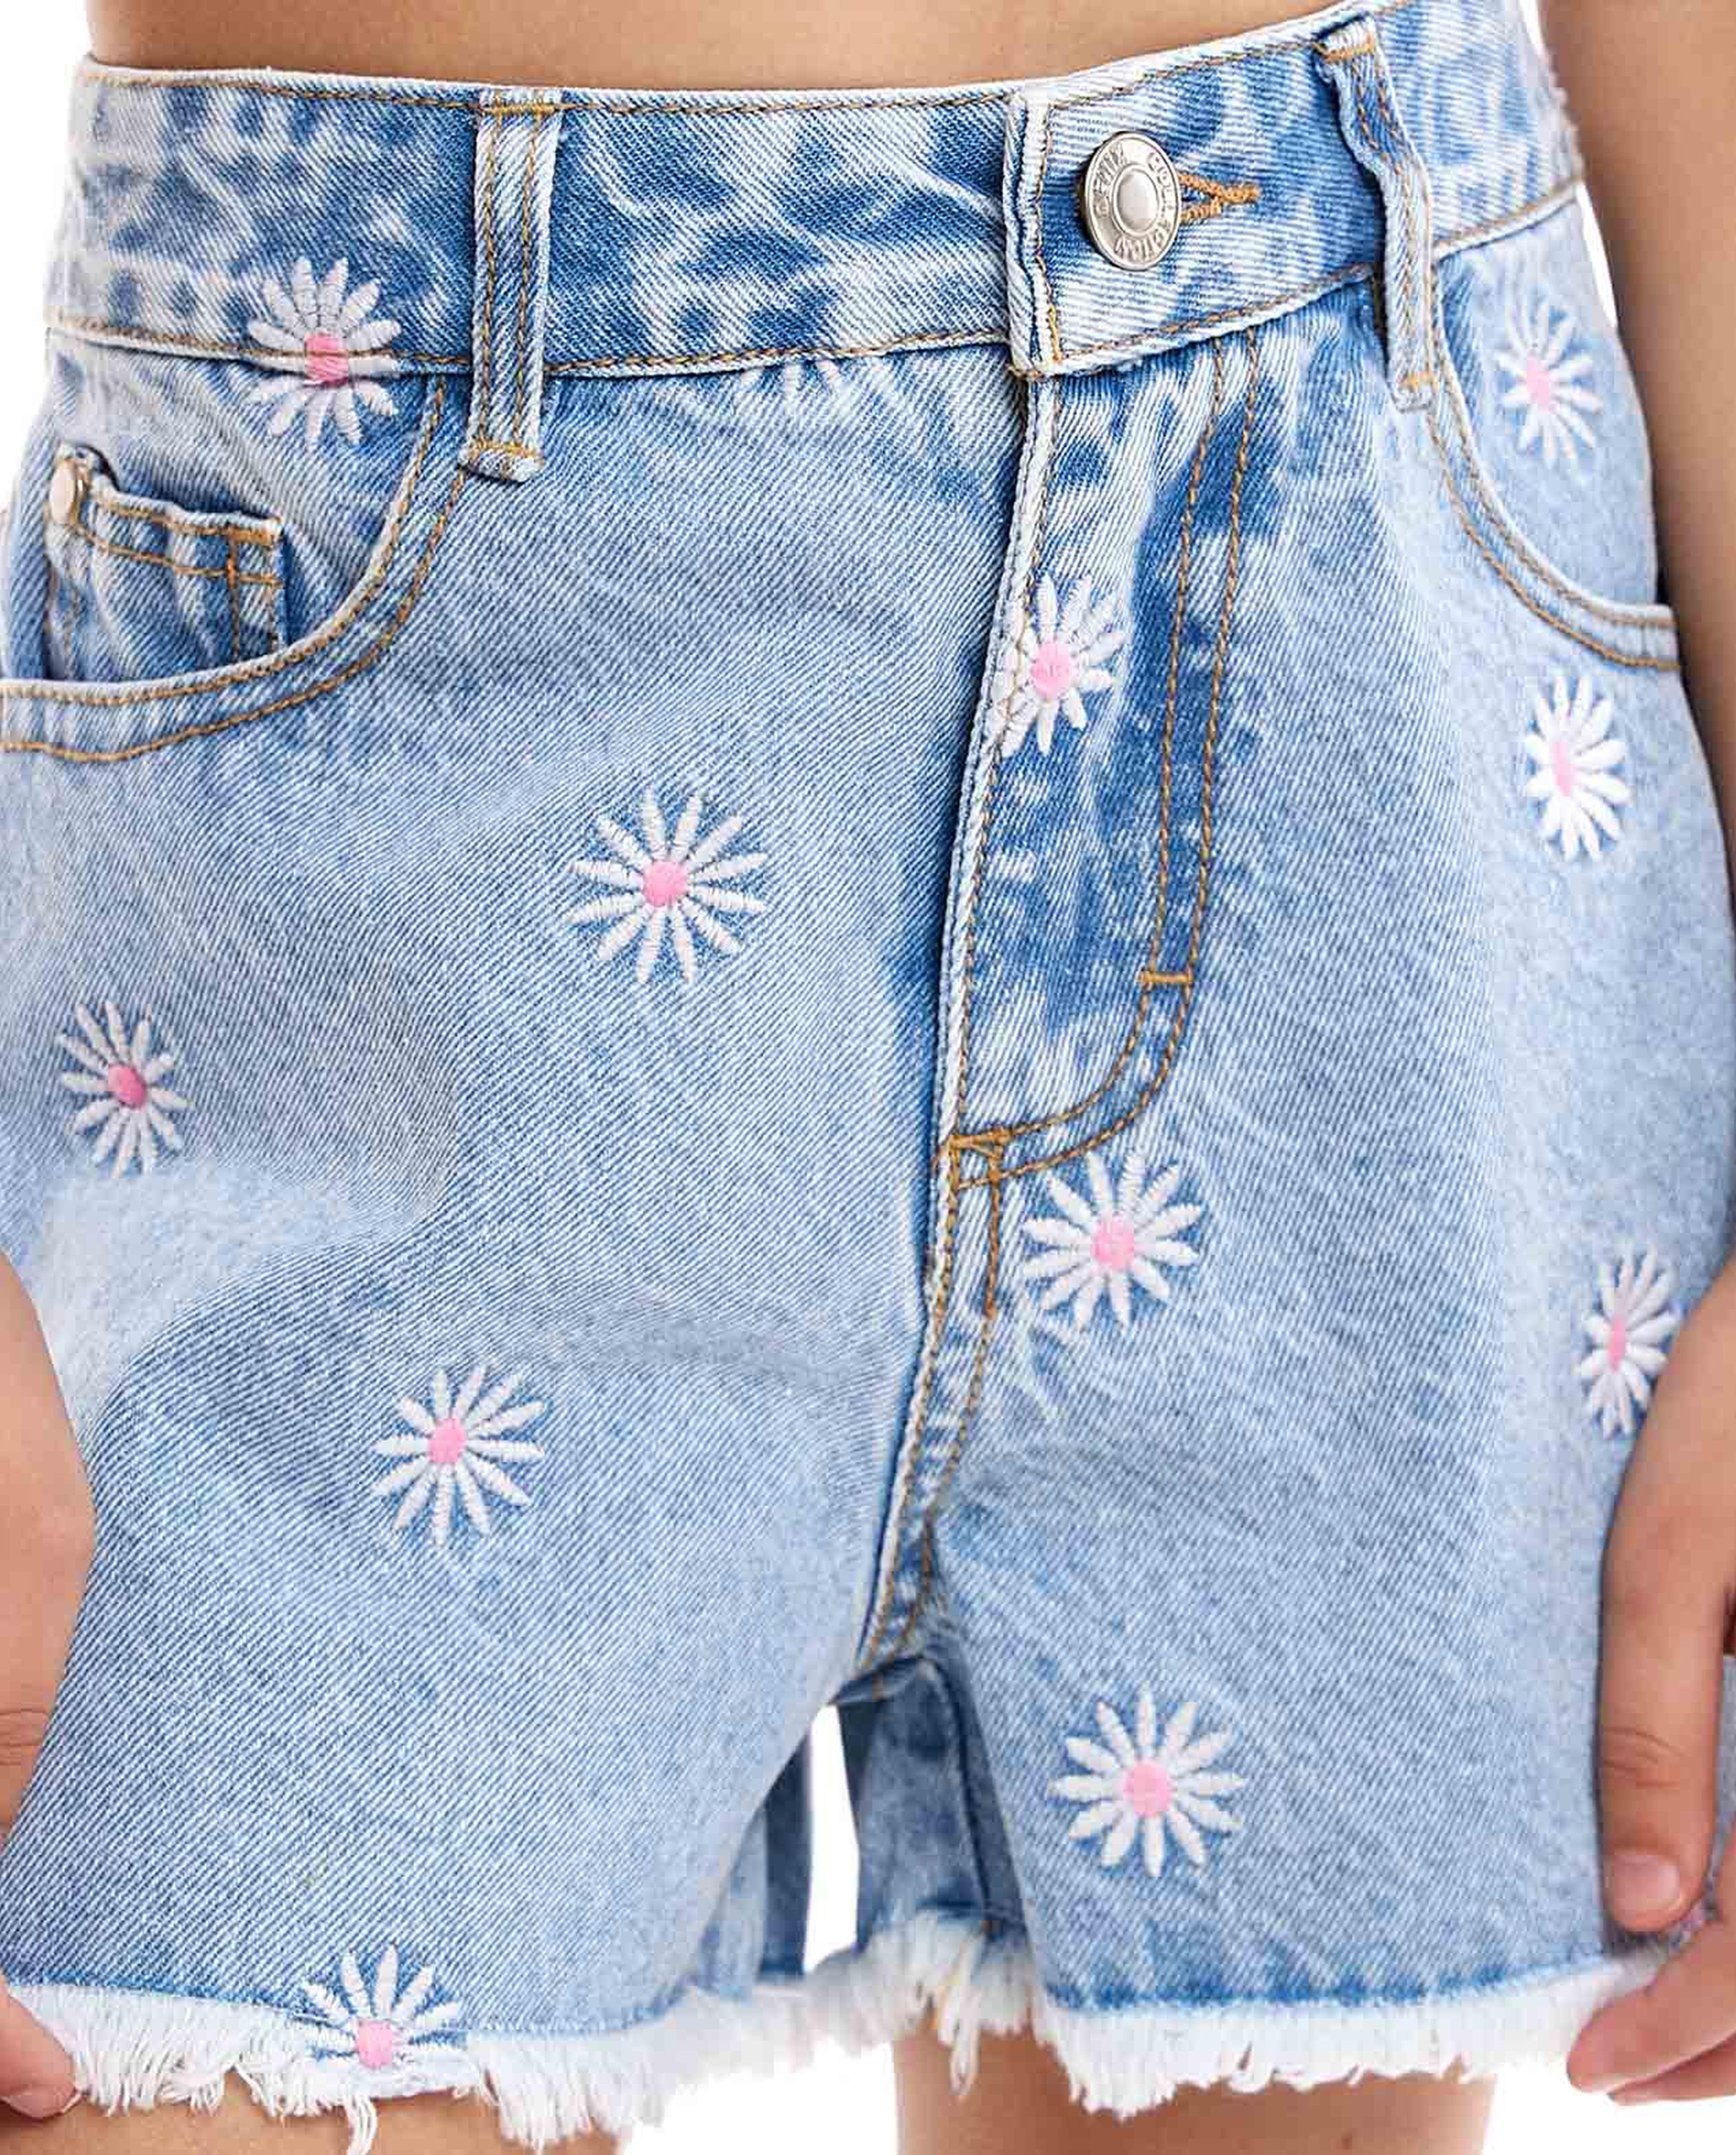 Daisy Embroidered Denim Shorts